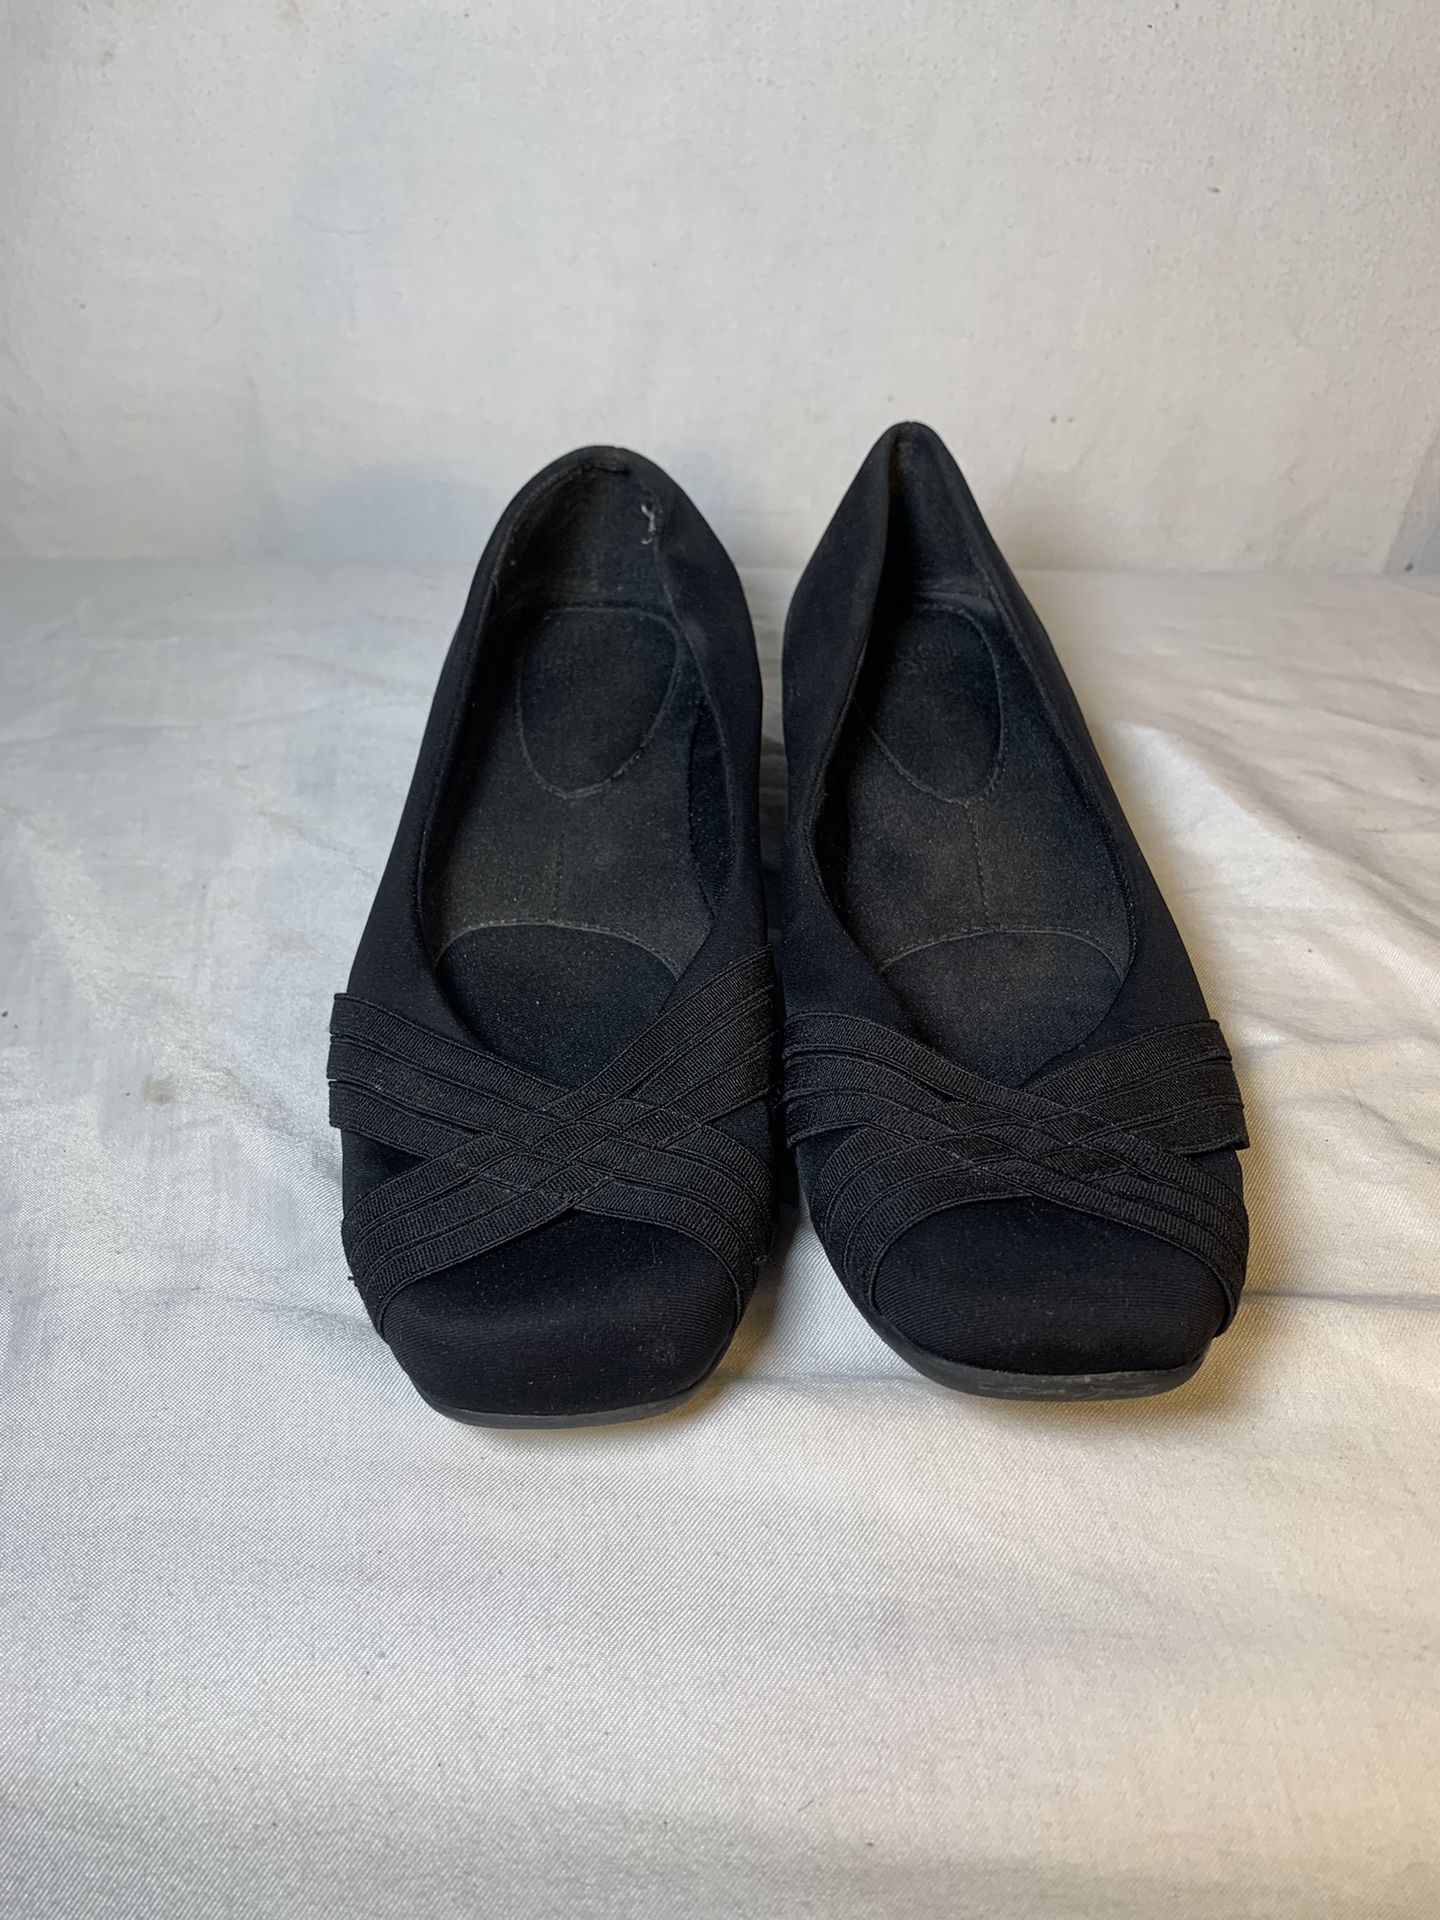 Mootsie Tootsies Danery Black Fabric Comfort Slip-On Flats Size 8